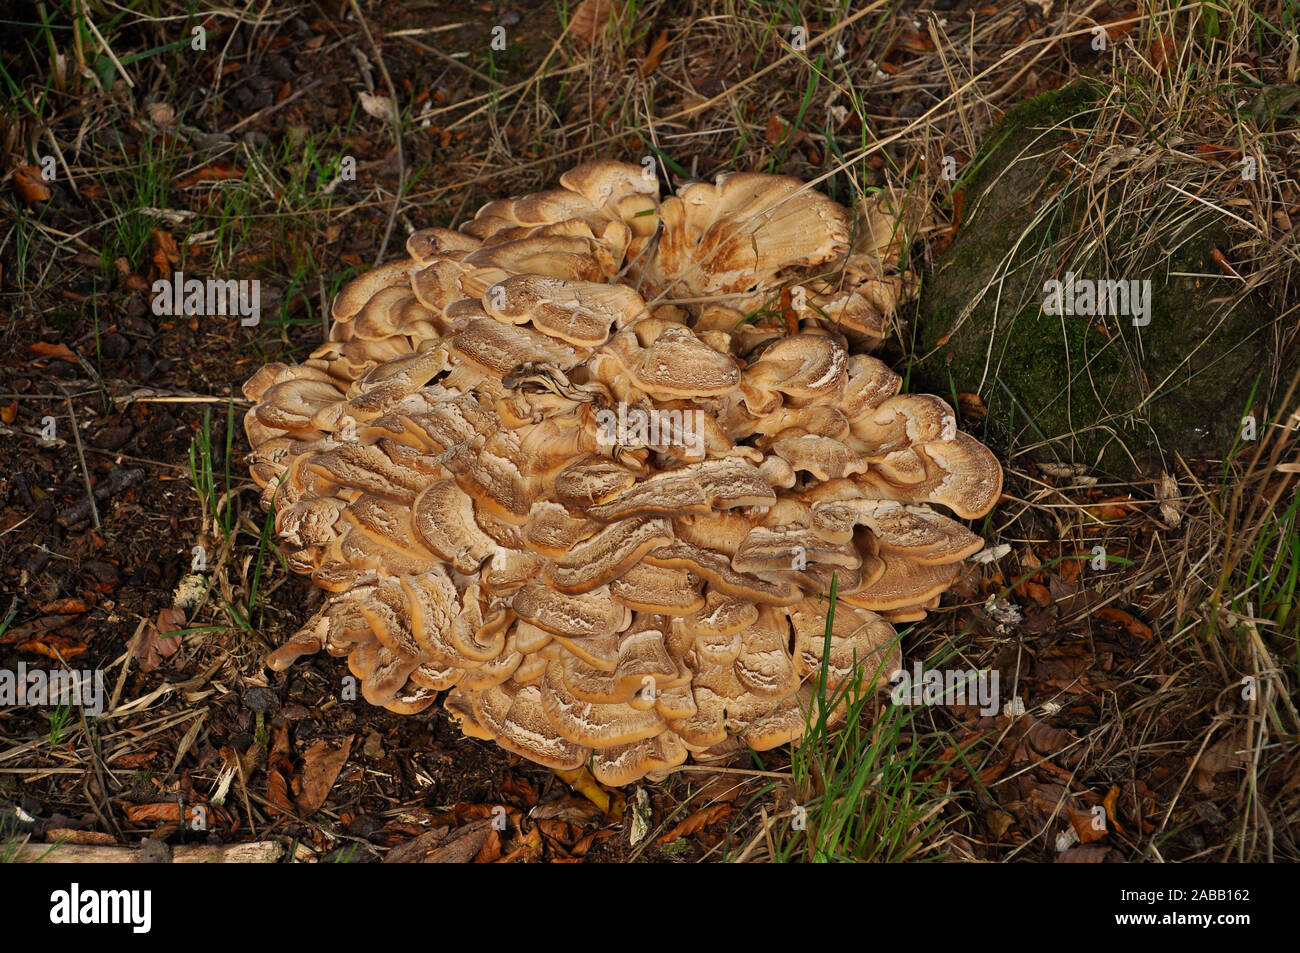 Polypore gigante,Meripilus giganteus,Meripilaceae, staffa fungo, nei boschi di Stourhead, Wiltshire, Regno Unito Foto Stock